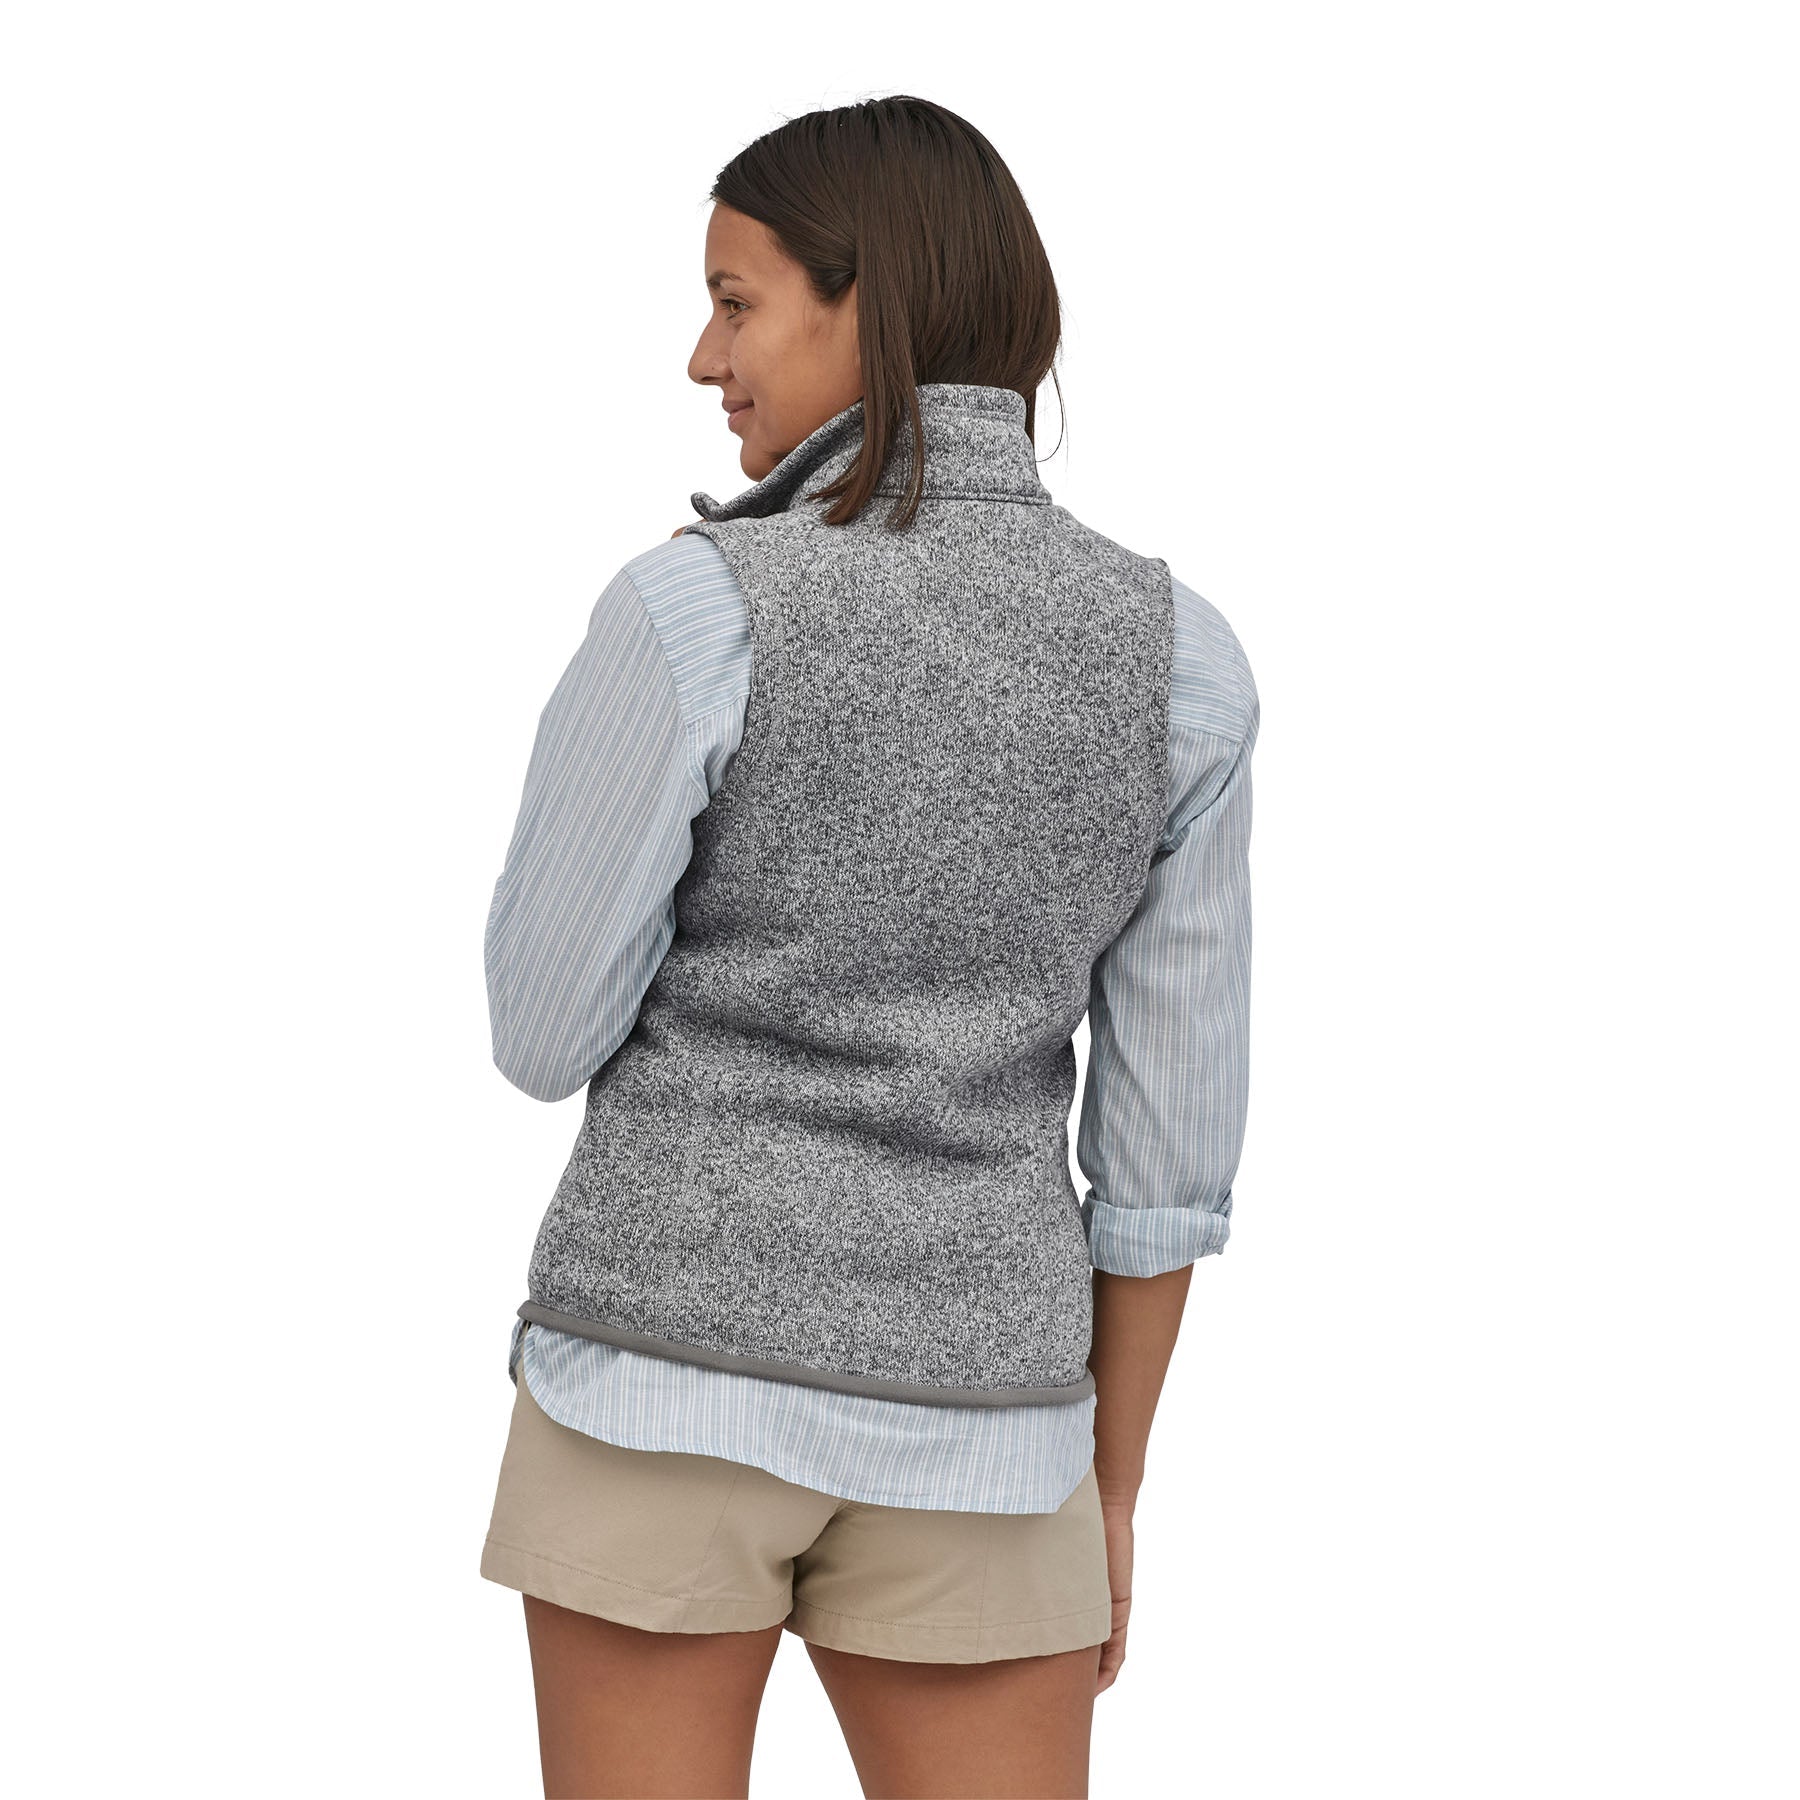 Women's Better Sweater® Vest